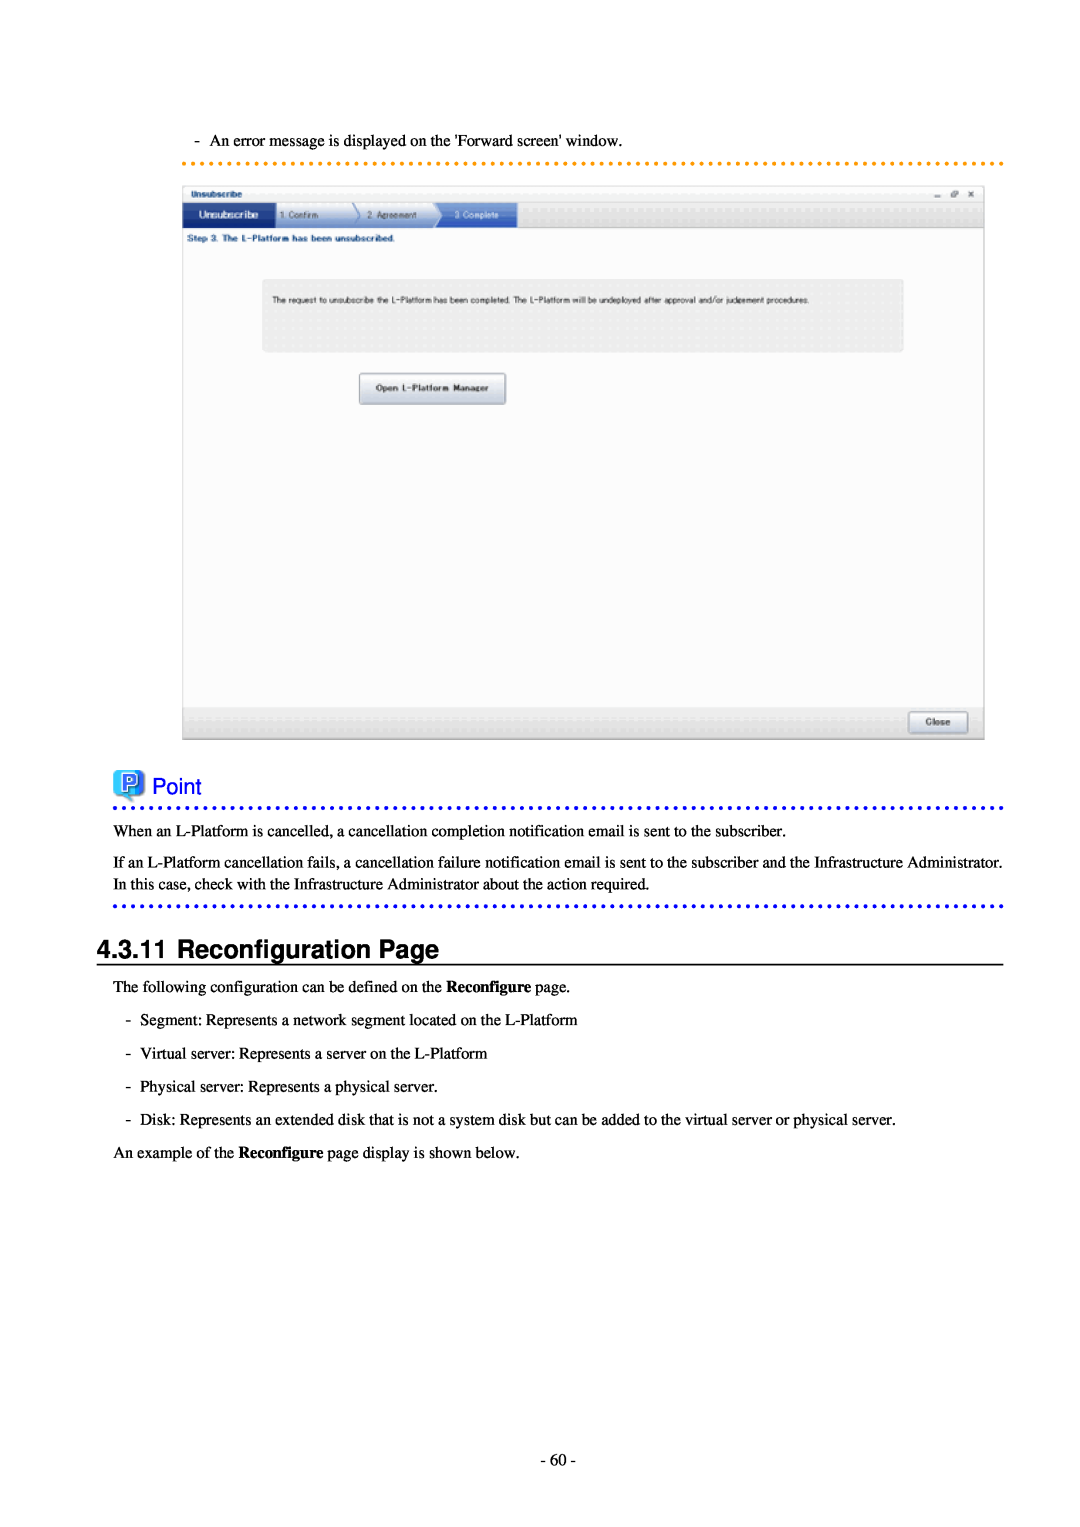 Fujitsu V3.0.0 manual Reconfiguration Page, Point 